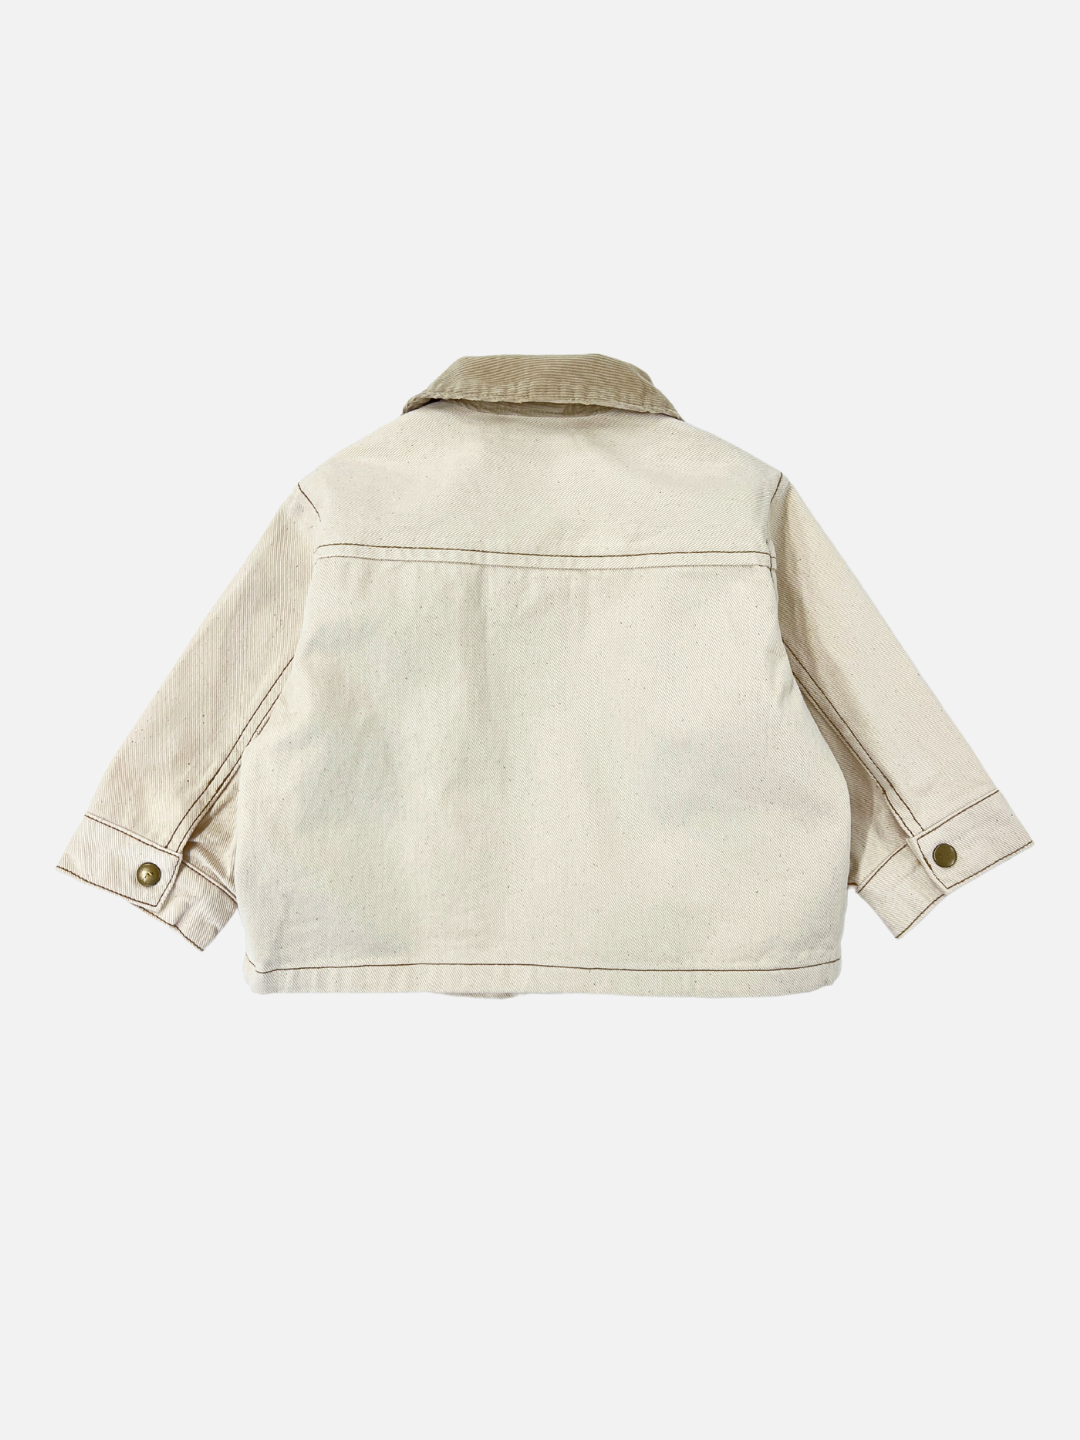 Natural | Back view of kids ecru denim jacket with beige corduroy collar.